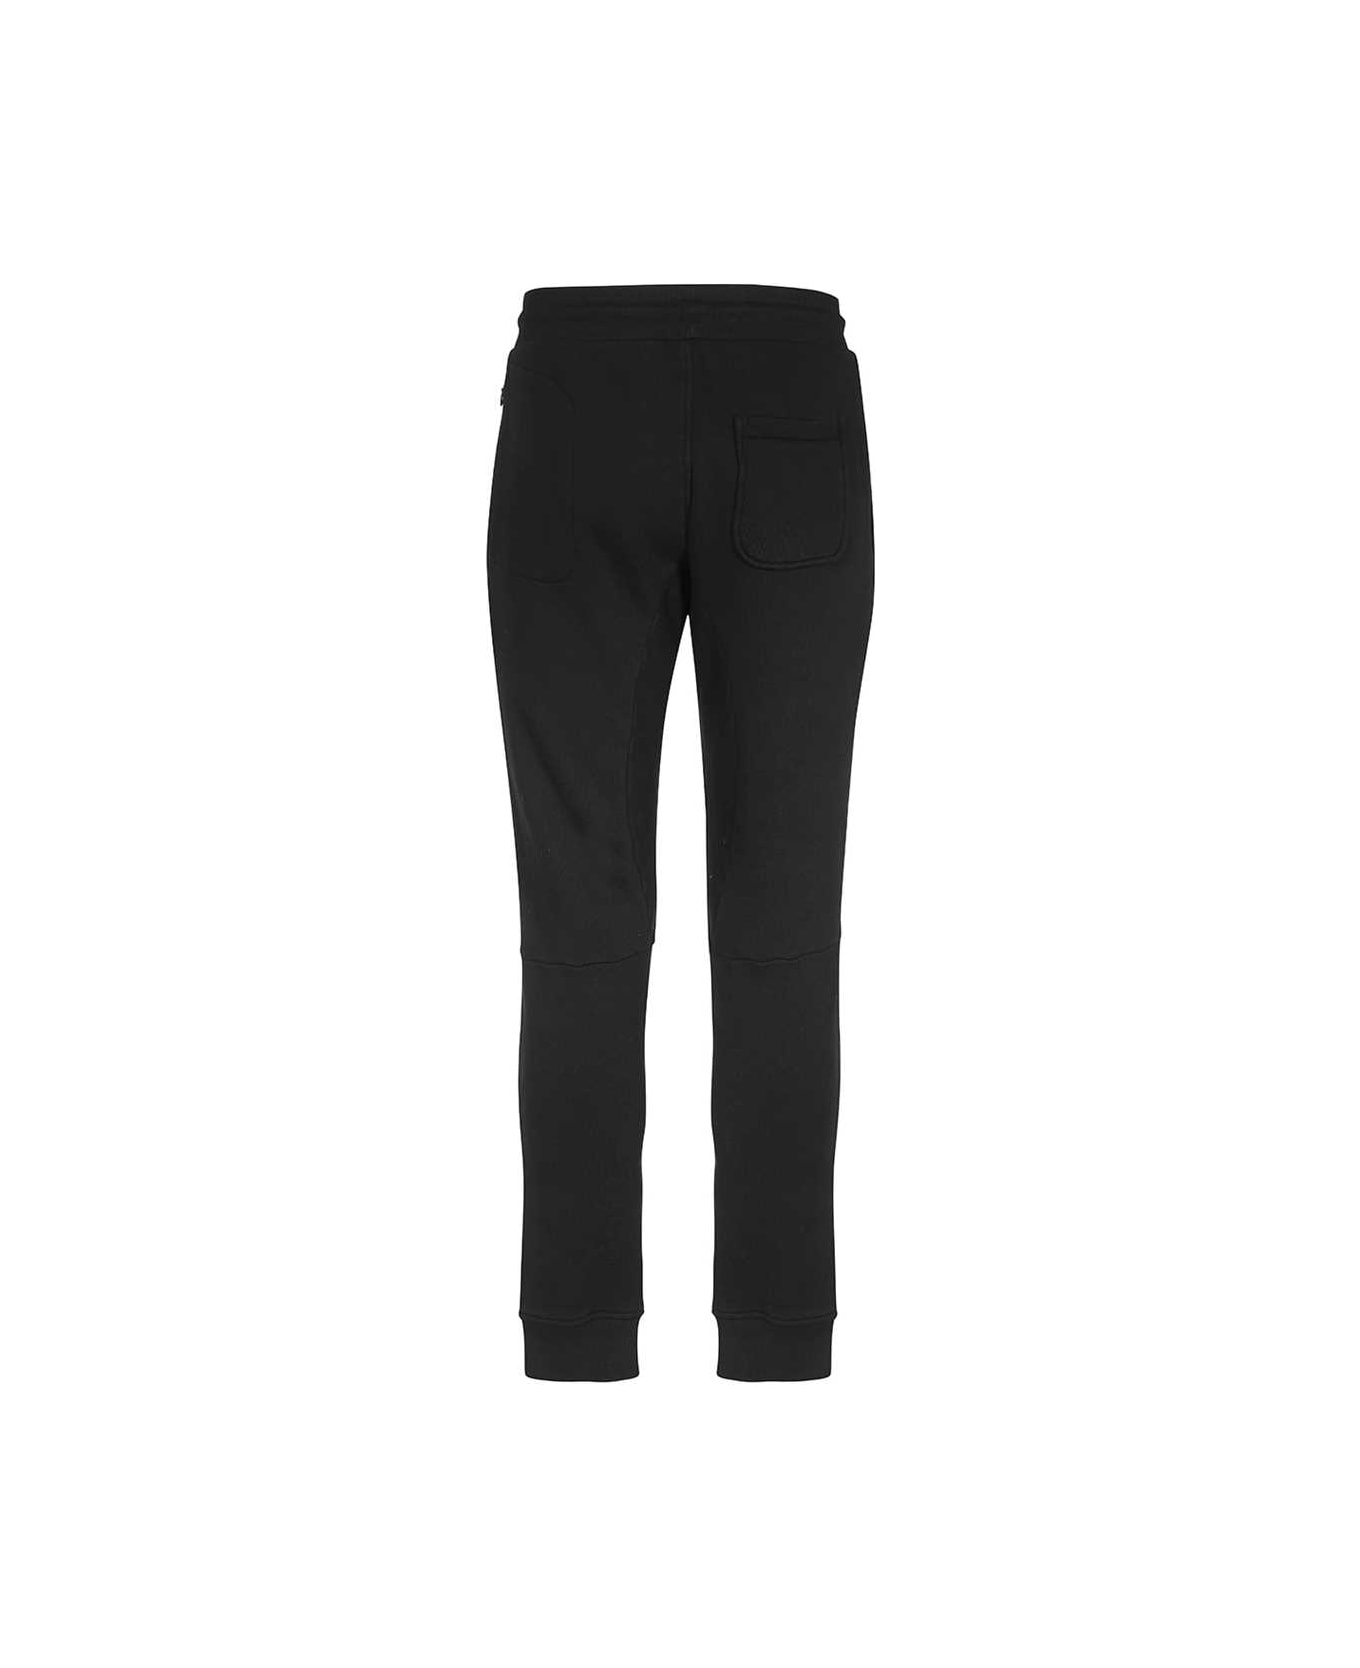 Woolrich Cotton Trousers - black スウェットパンツ